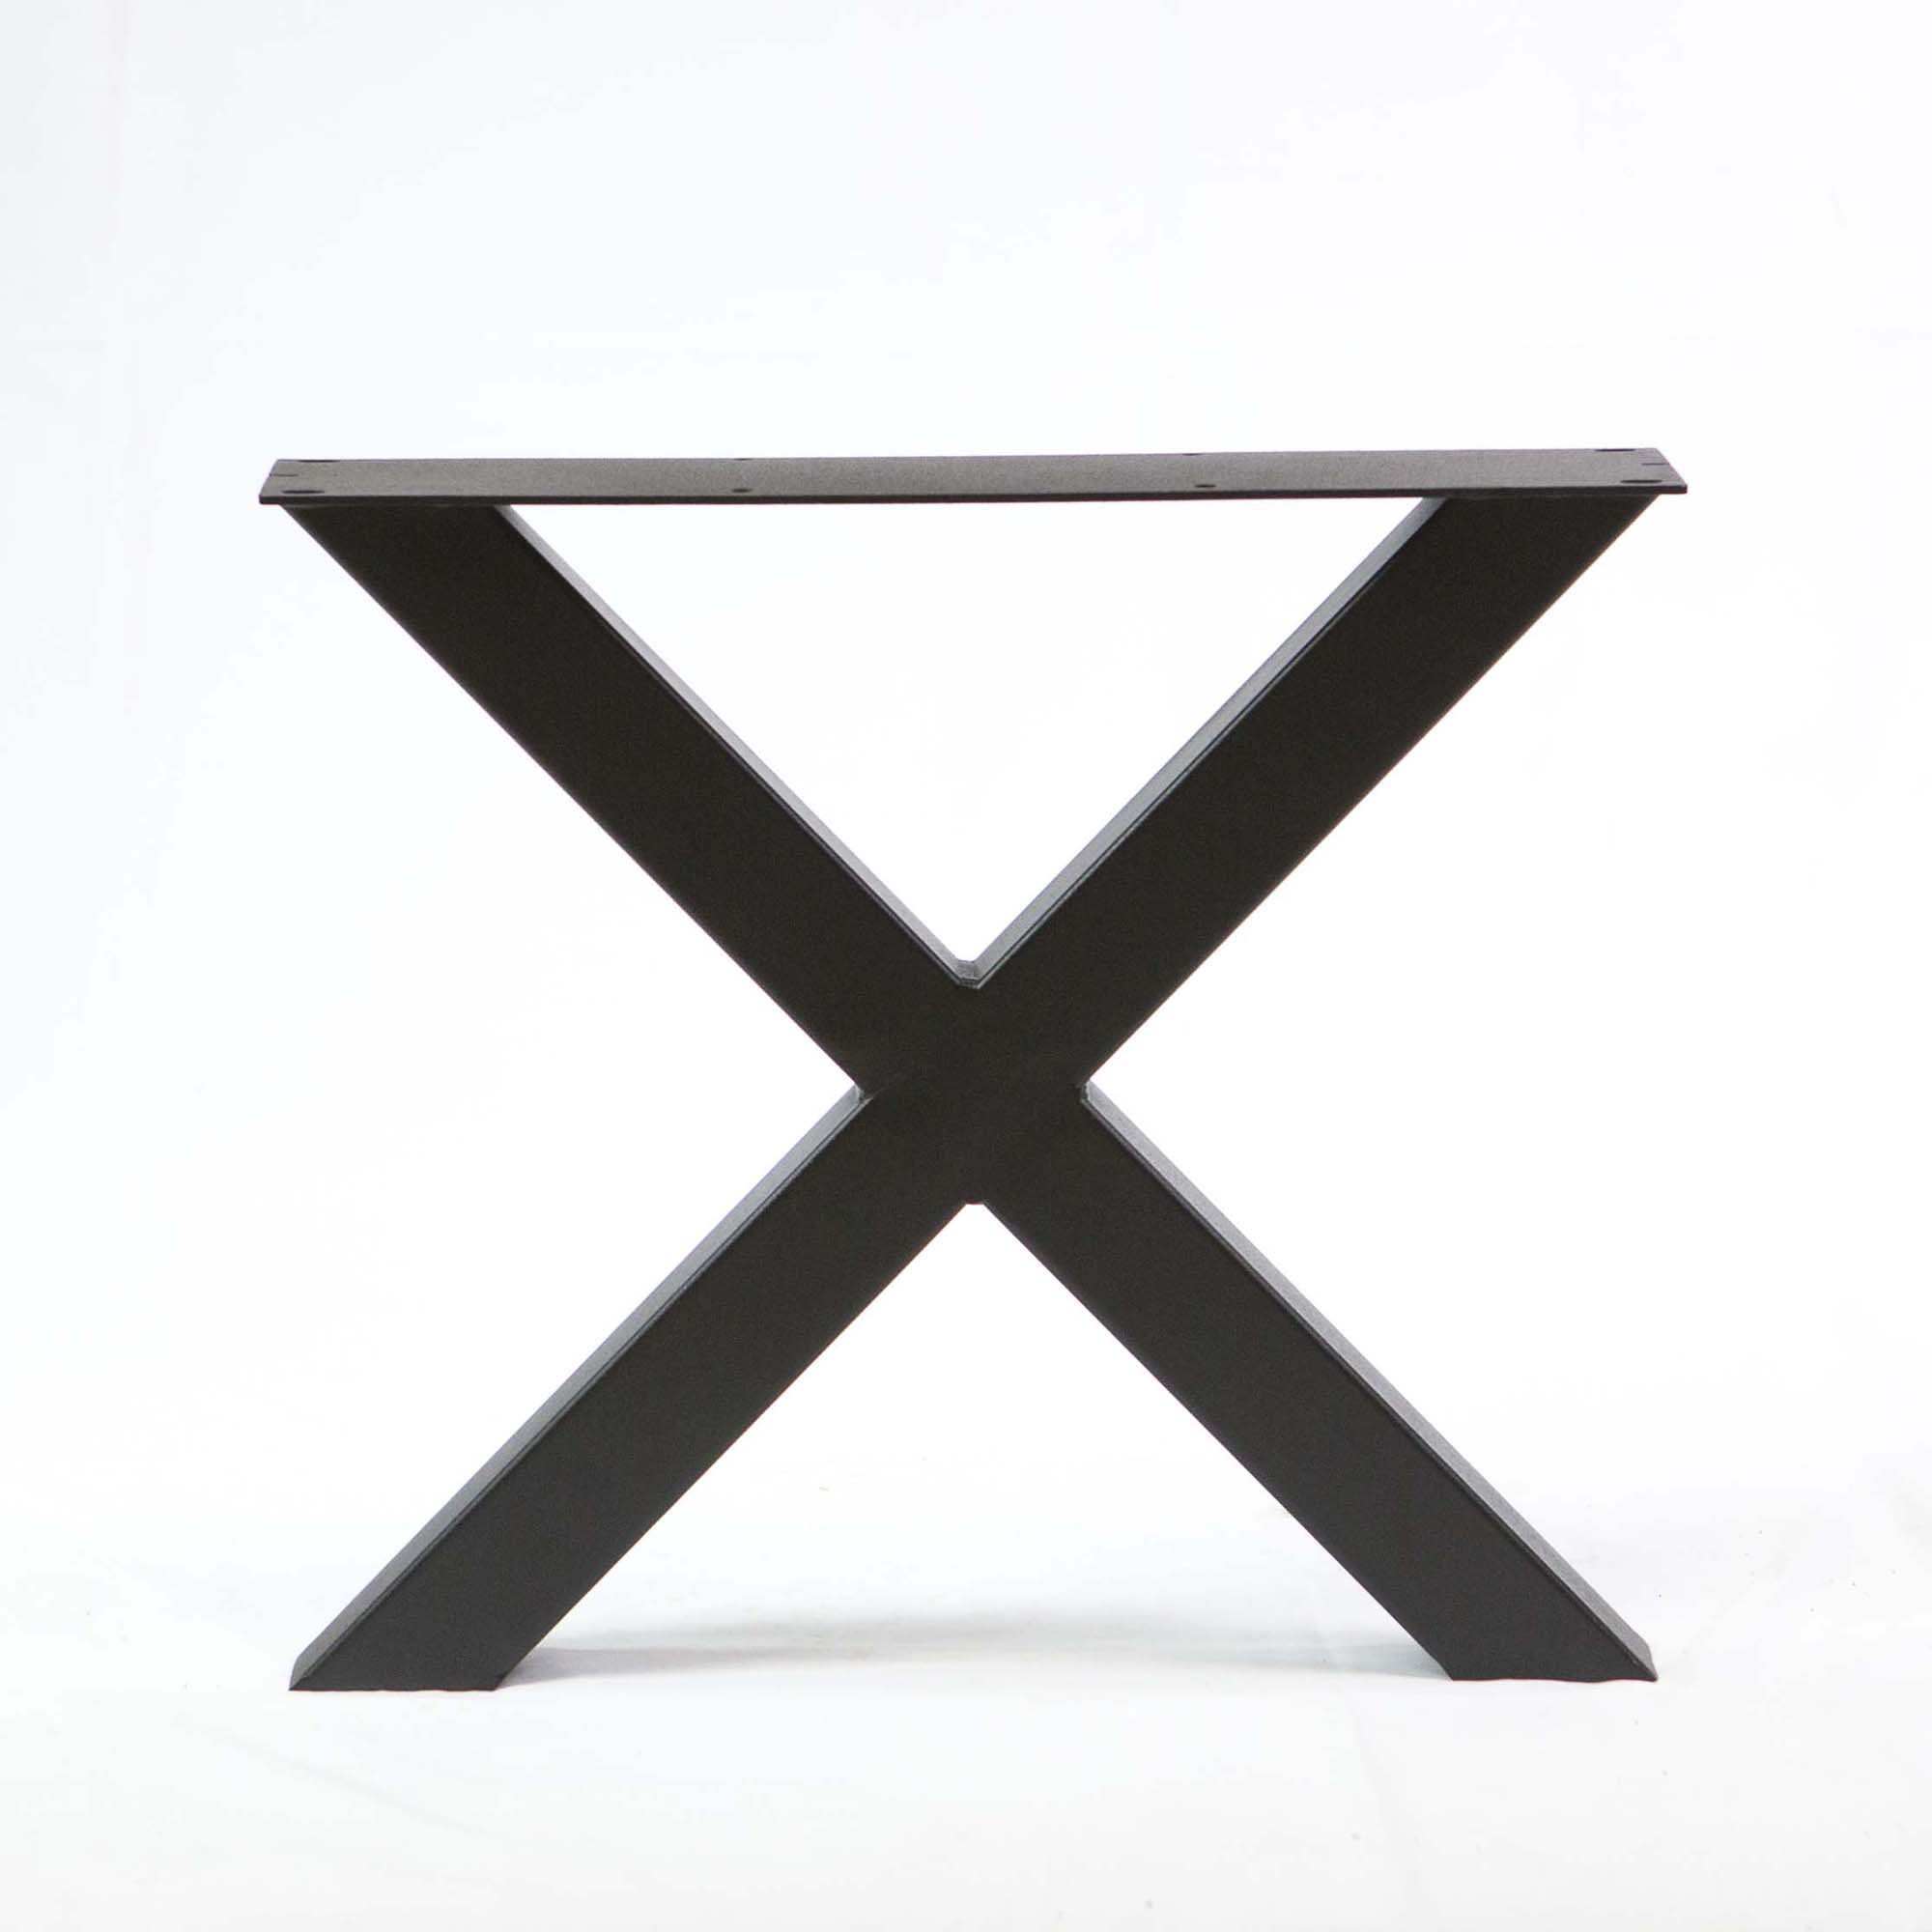 W5037D Heavy duty Coffee table X legs, 1 Pair  41cm tall 46cm width